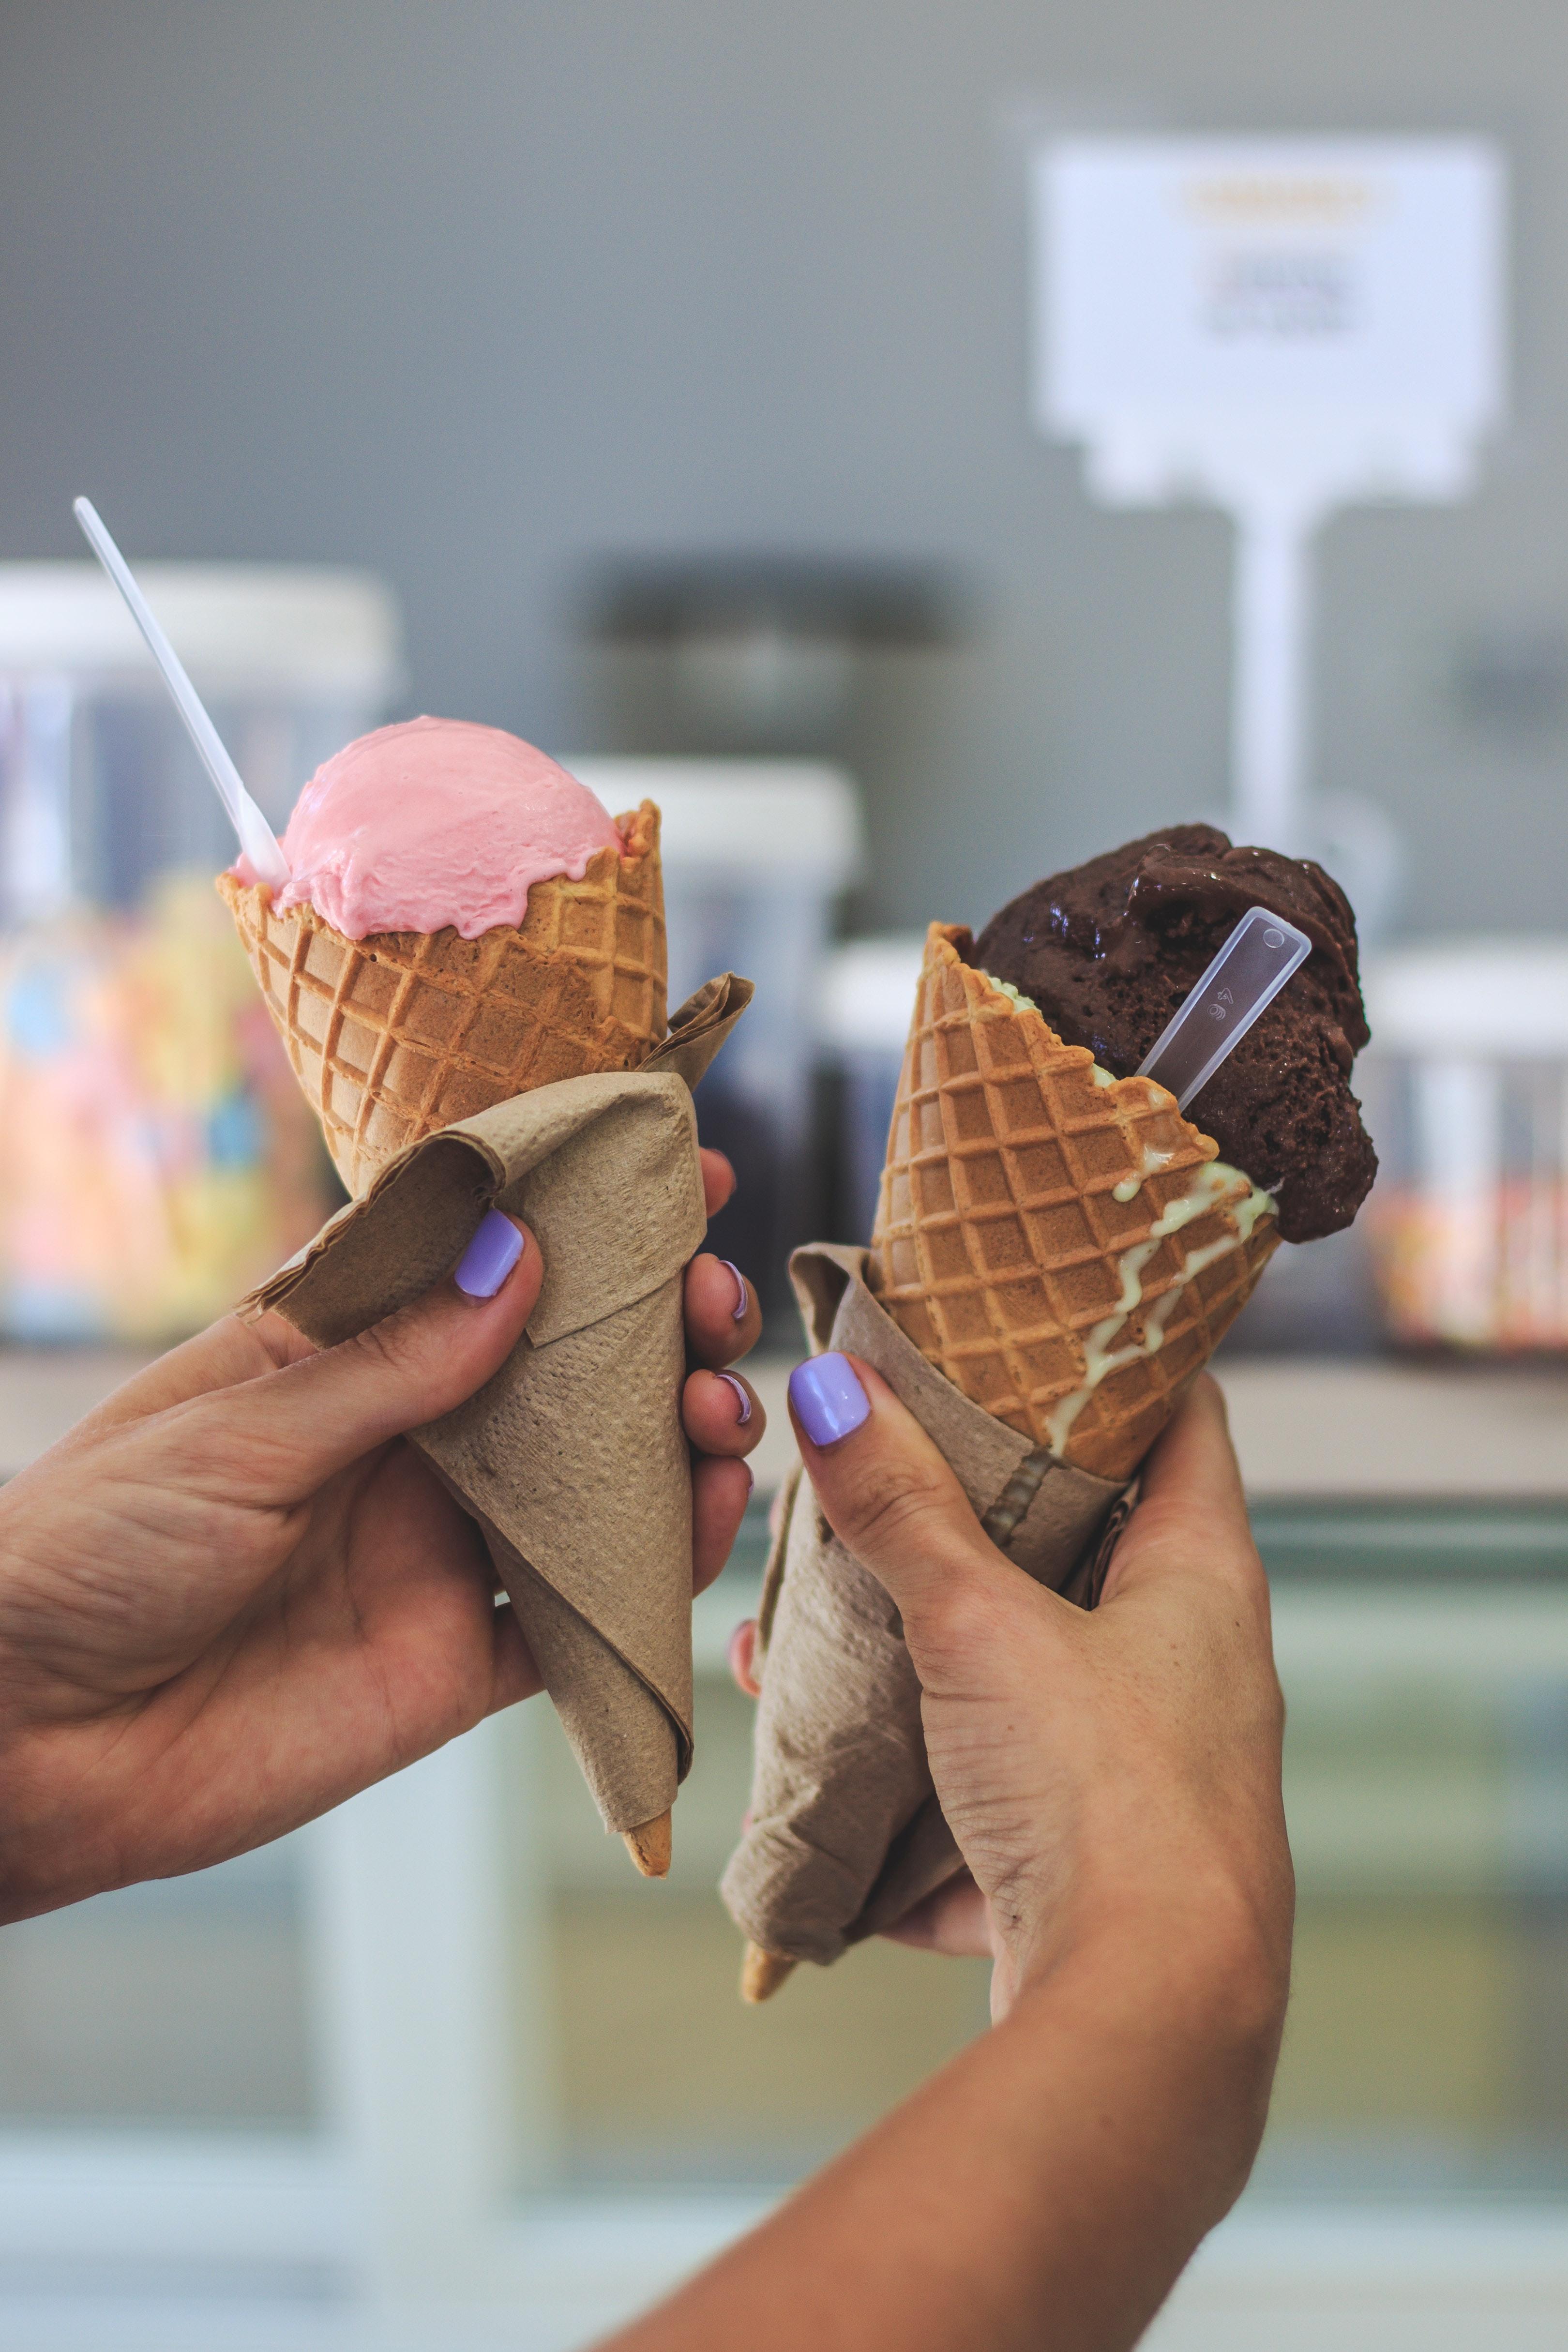 What happens if you eat expired ice cream cones? 